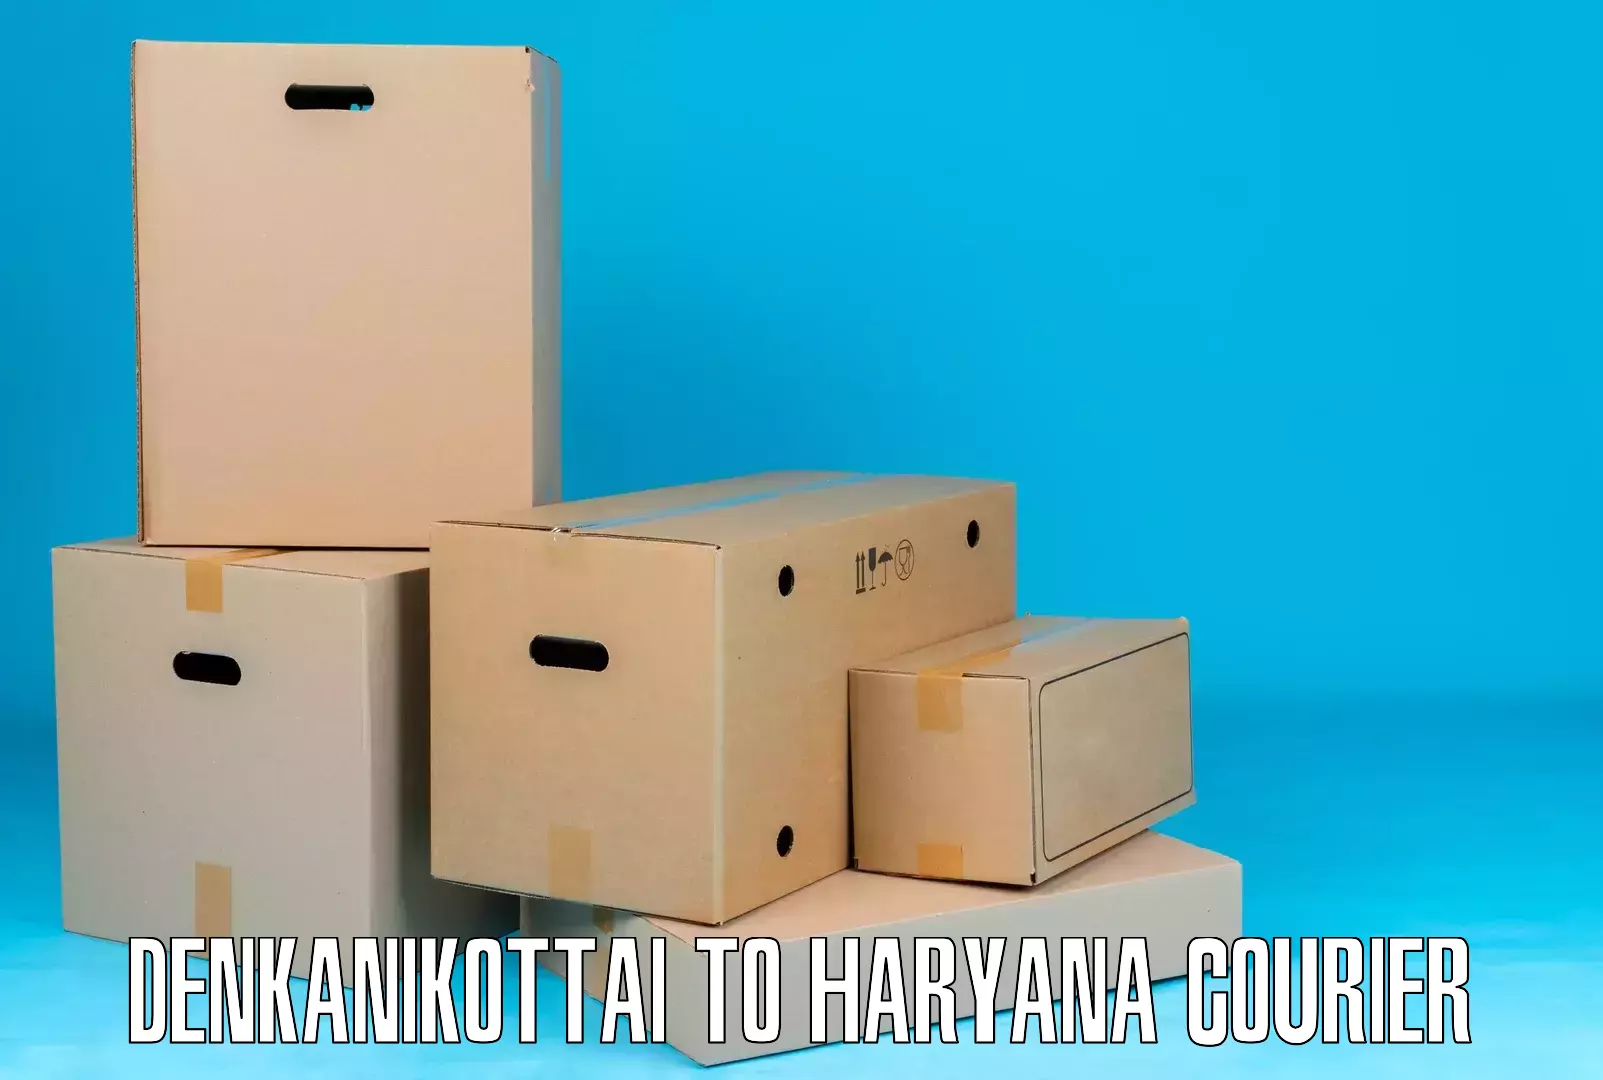 Business shipping needs Denkanikottai to Rohtak